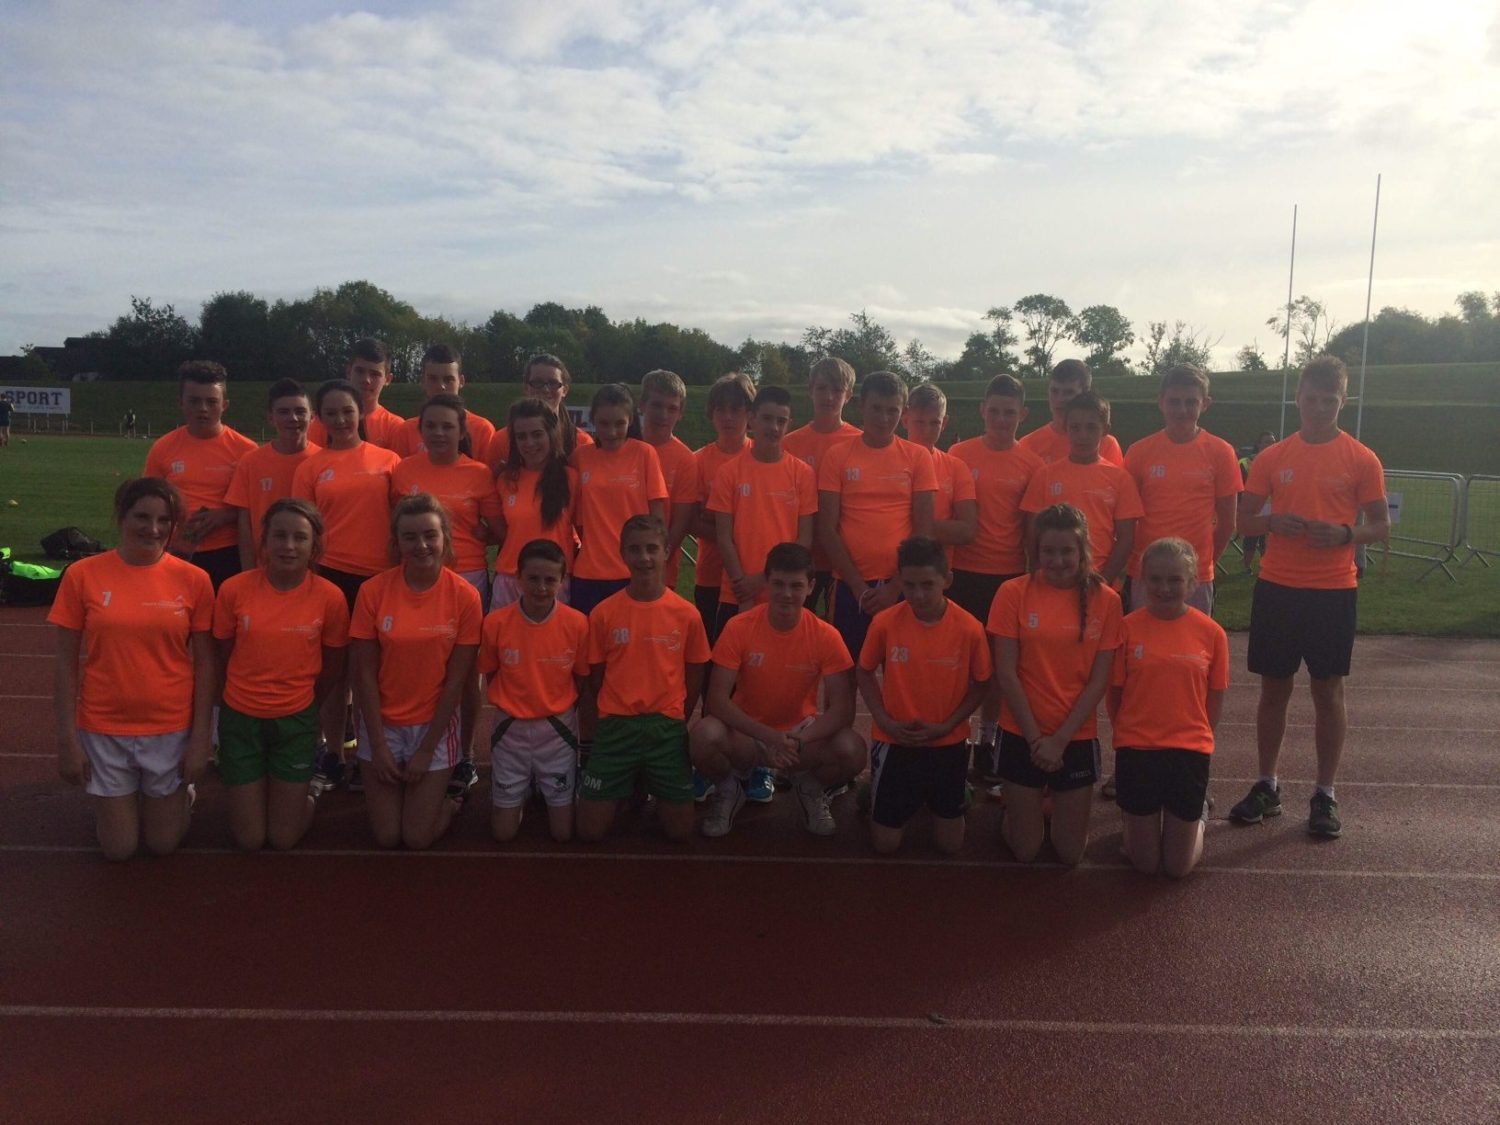 Desmond College Students complete the Marathon Challenge in the University of Limerick 2014